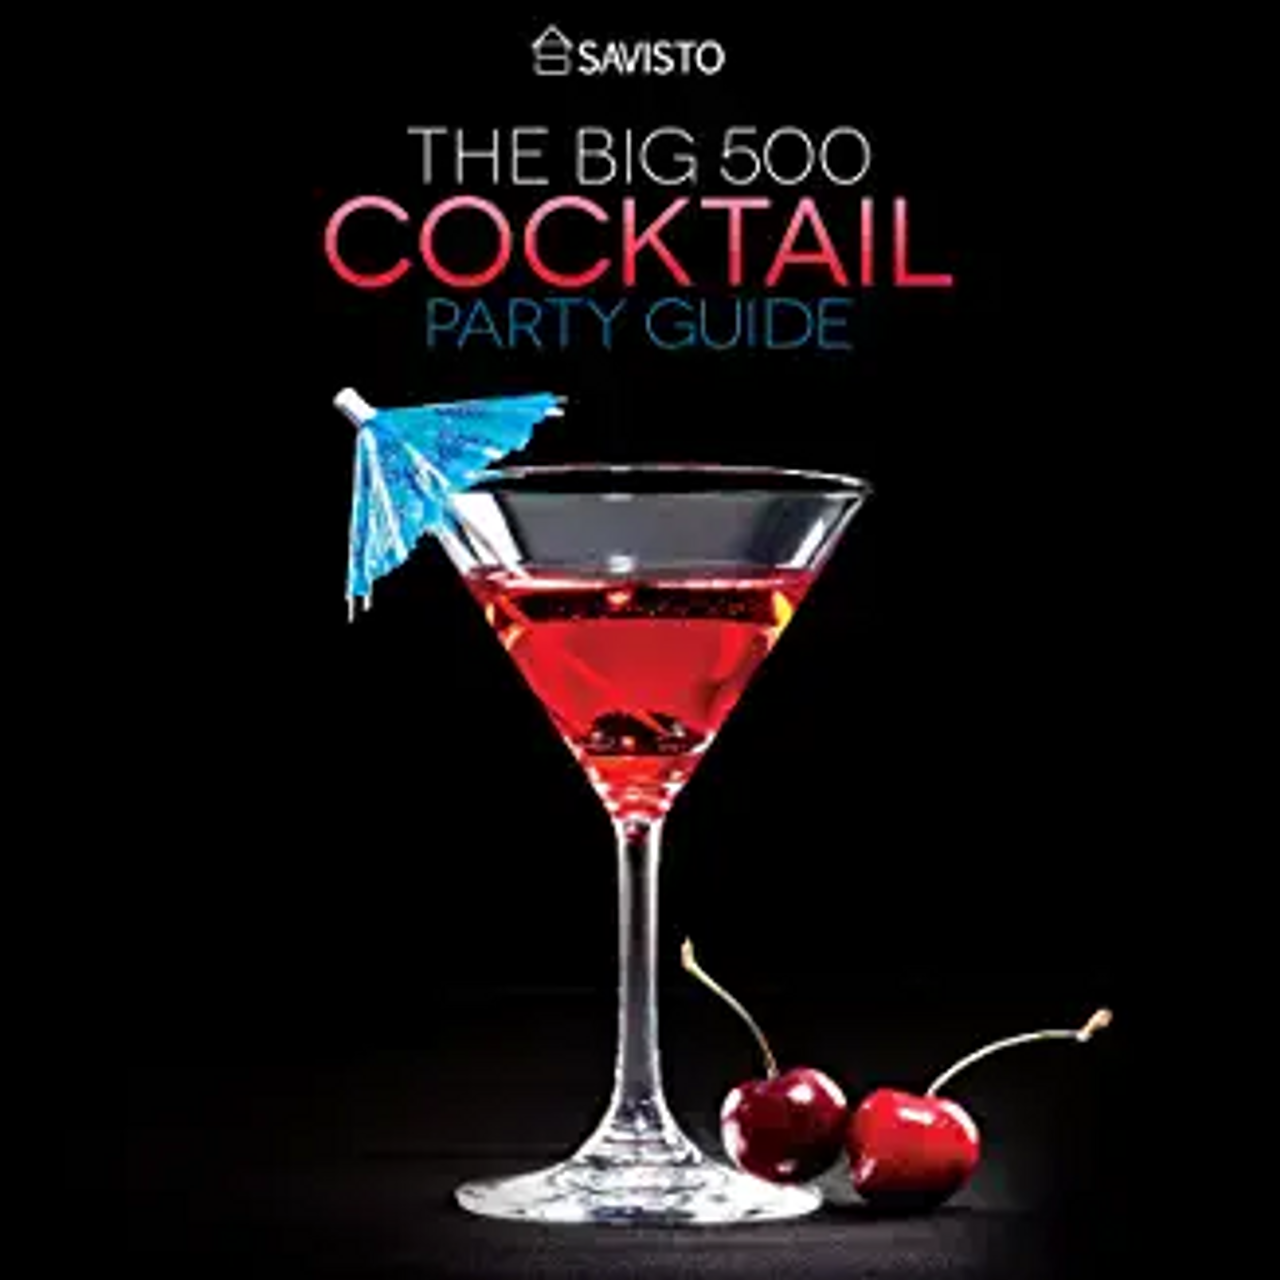 Savisto The Big 500 Cocktail Party Guide